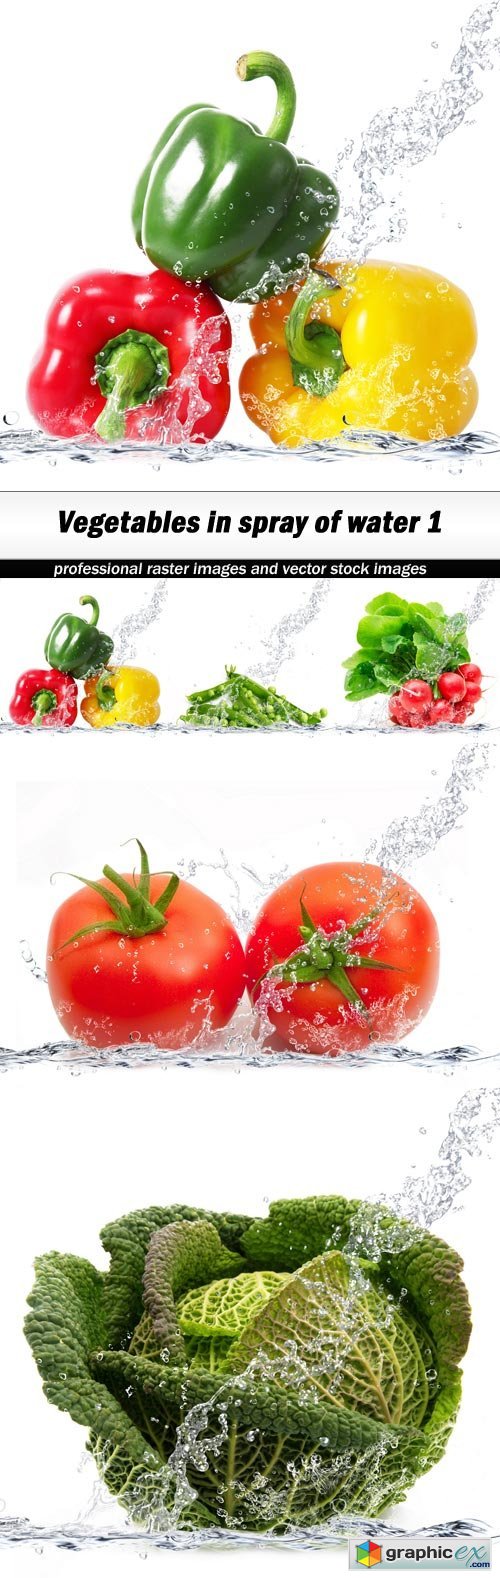 Vegetables in spray of water 1-5xUHQ JPEG